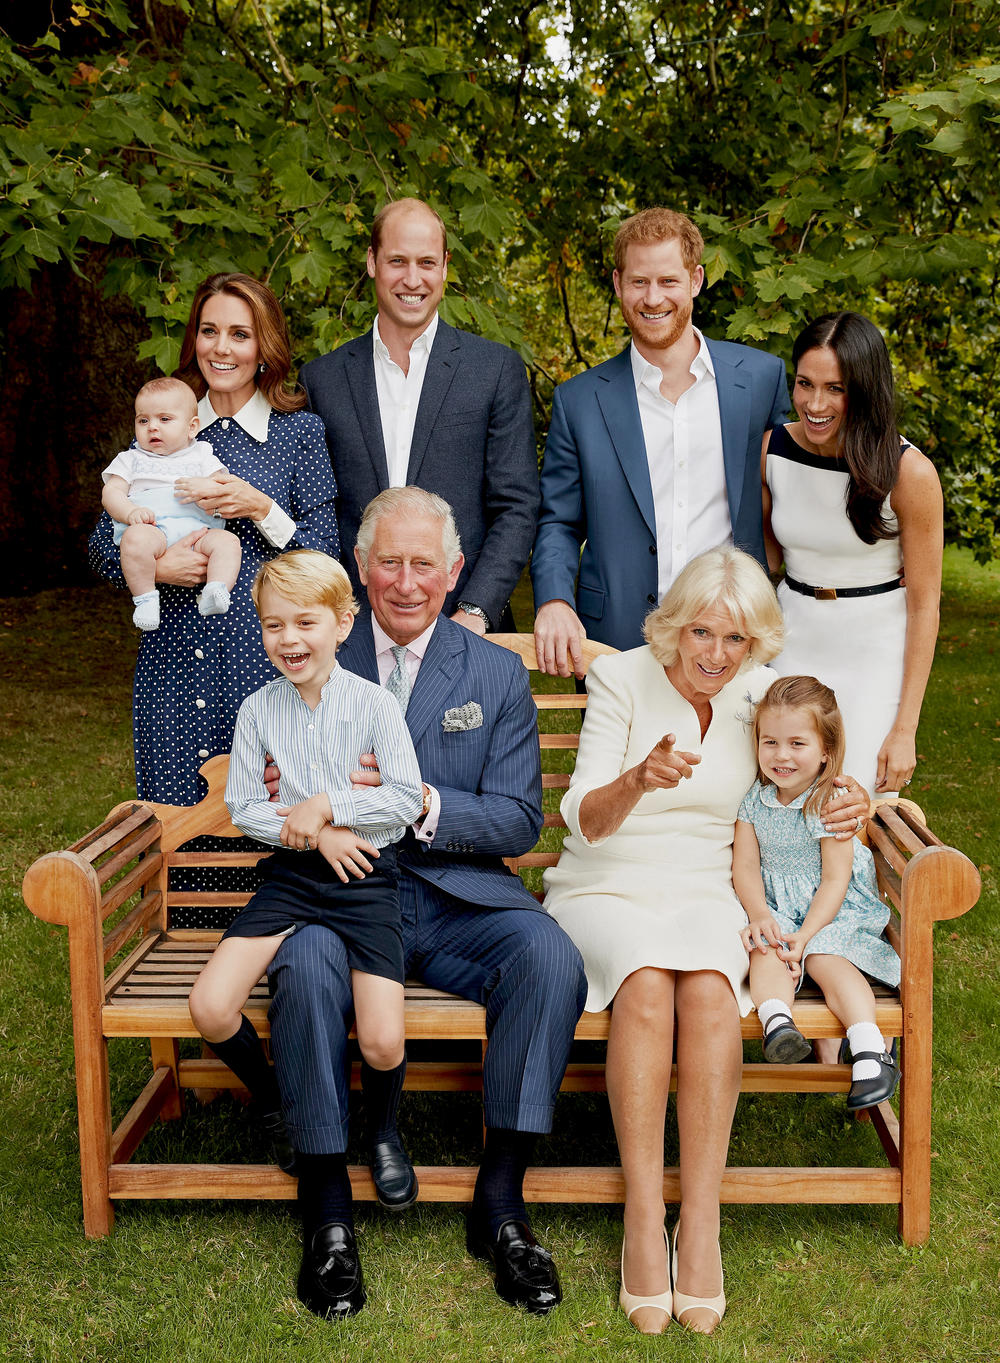 kraljevska porodica, princ Čarls, Megan Markl, Kejt Midlton, koristiti do 12.12. 2018.